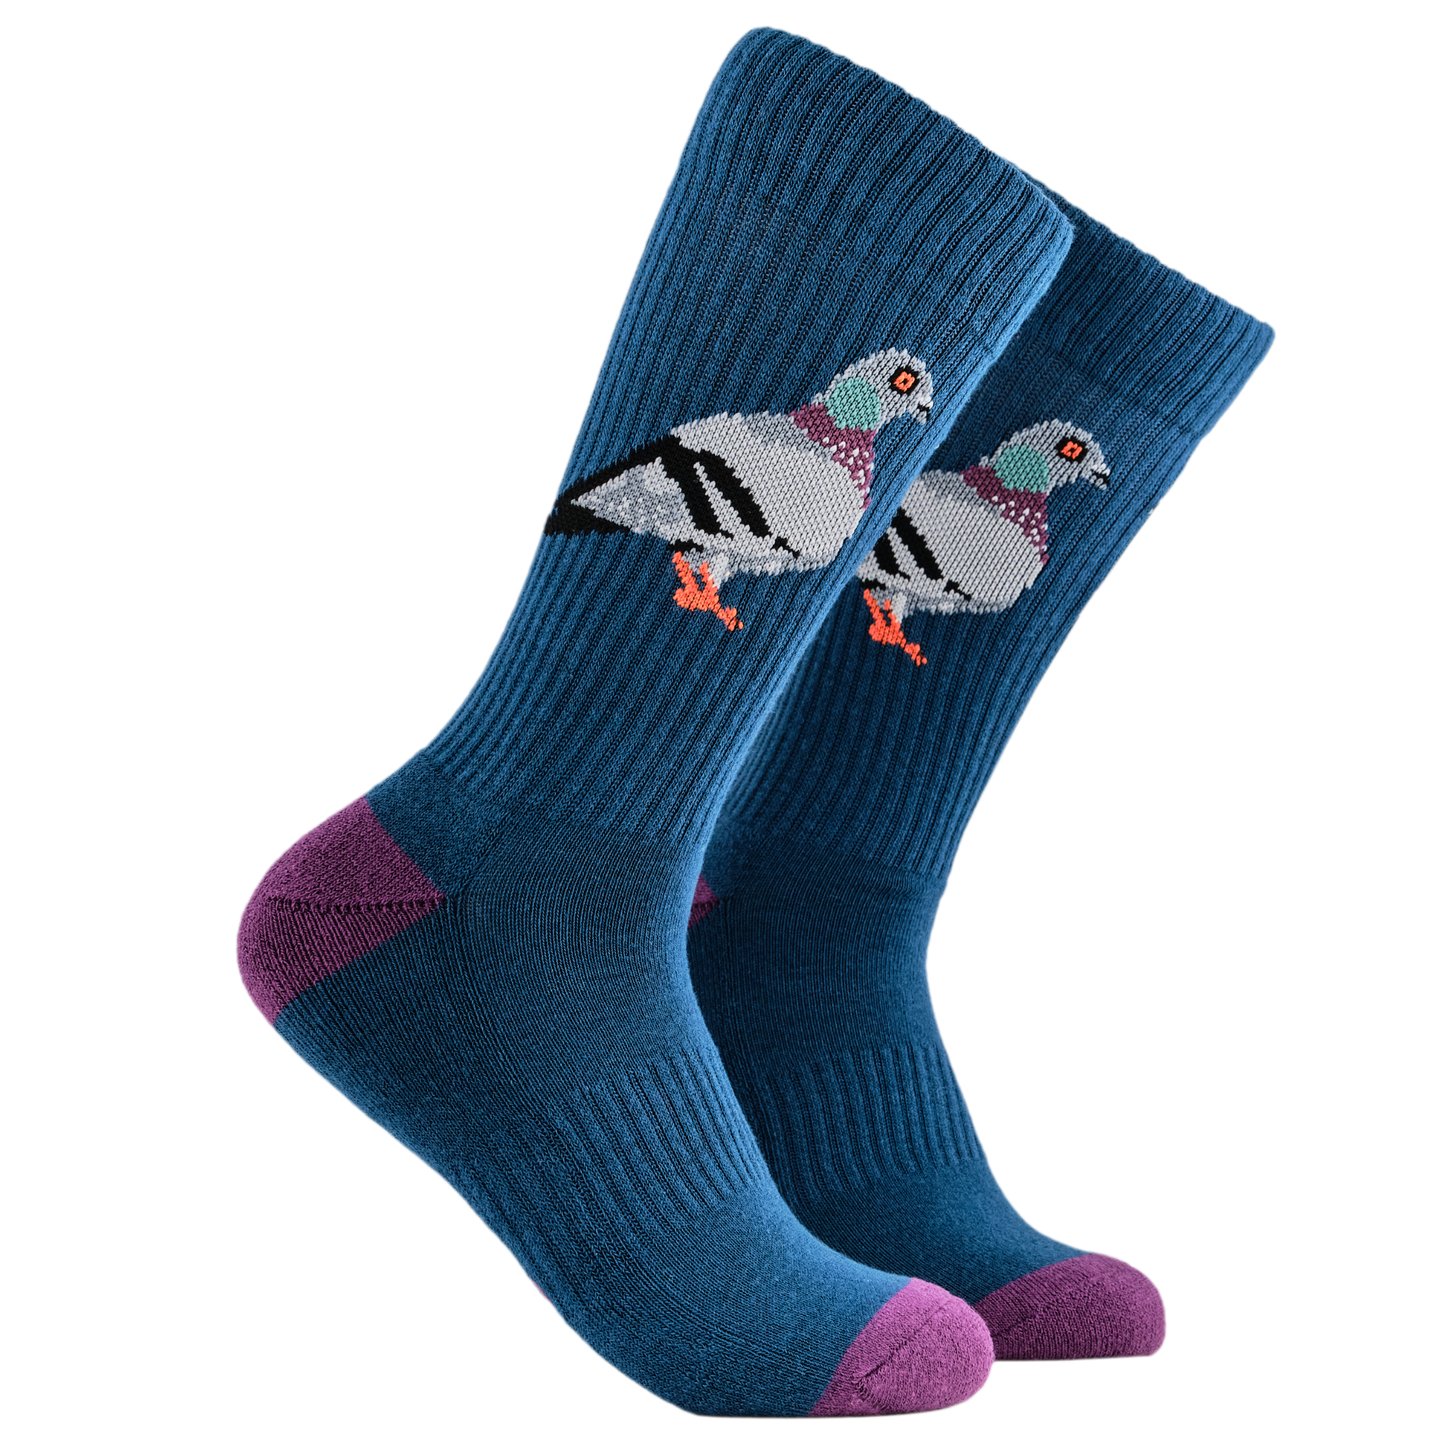 Pigeon Athletic Socks. A pair of socks depicting pigeons. Deep blue legs, blue cuff, purple heel and toe.